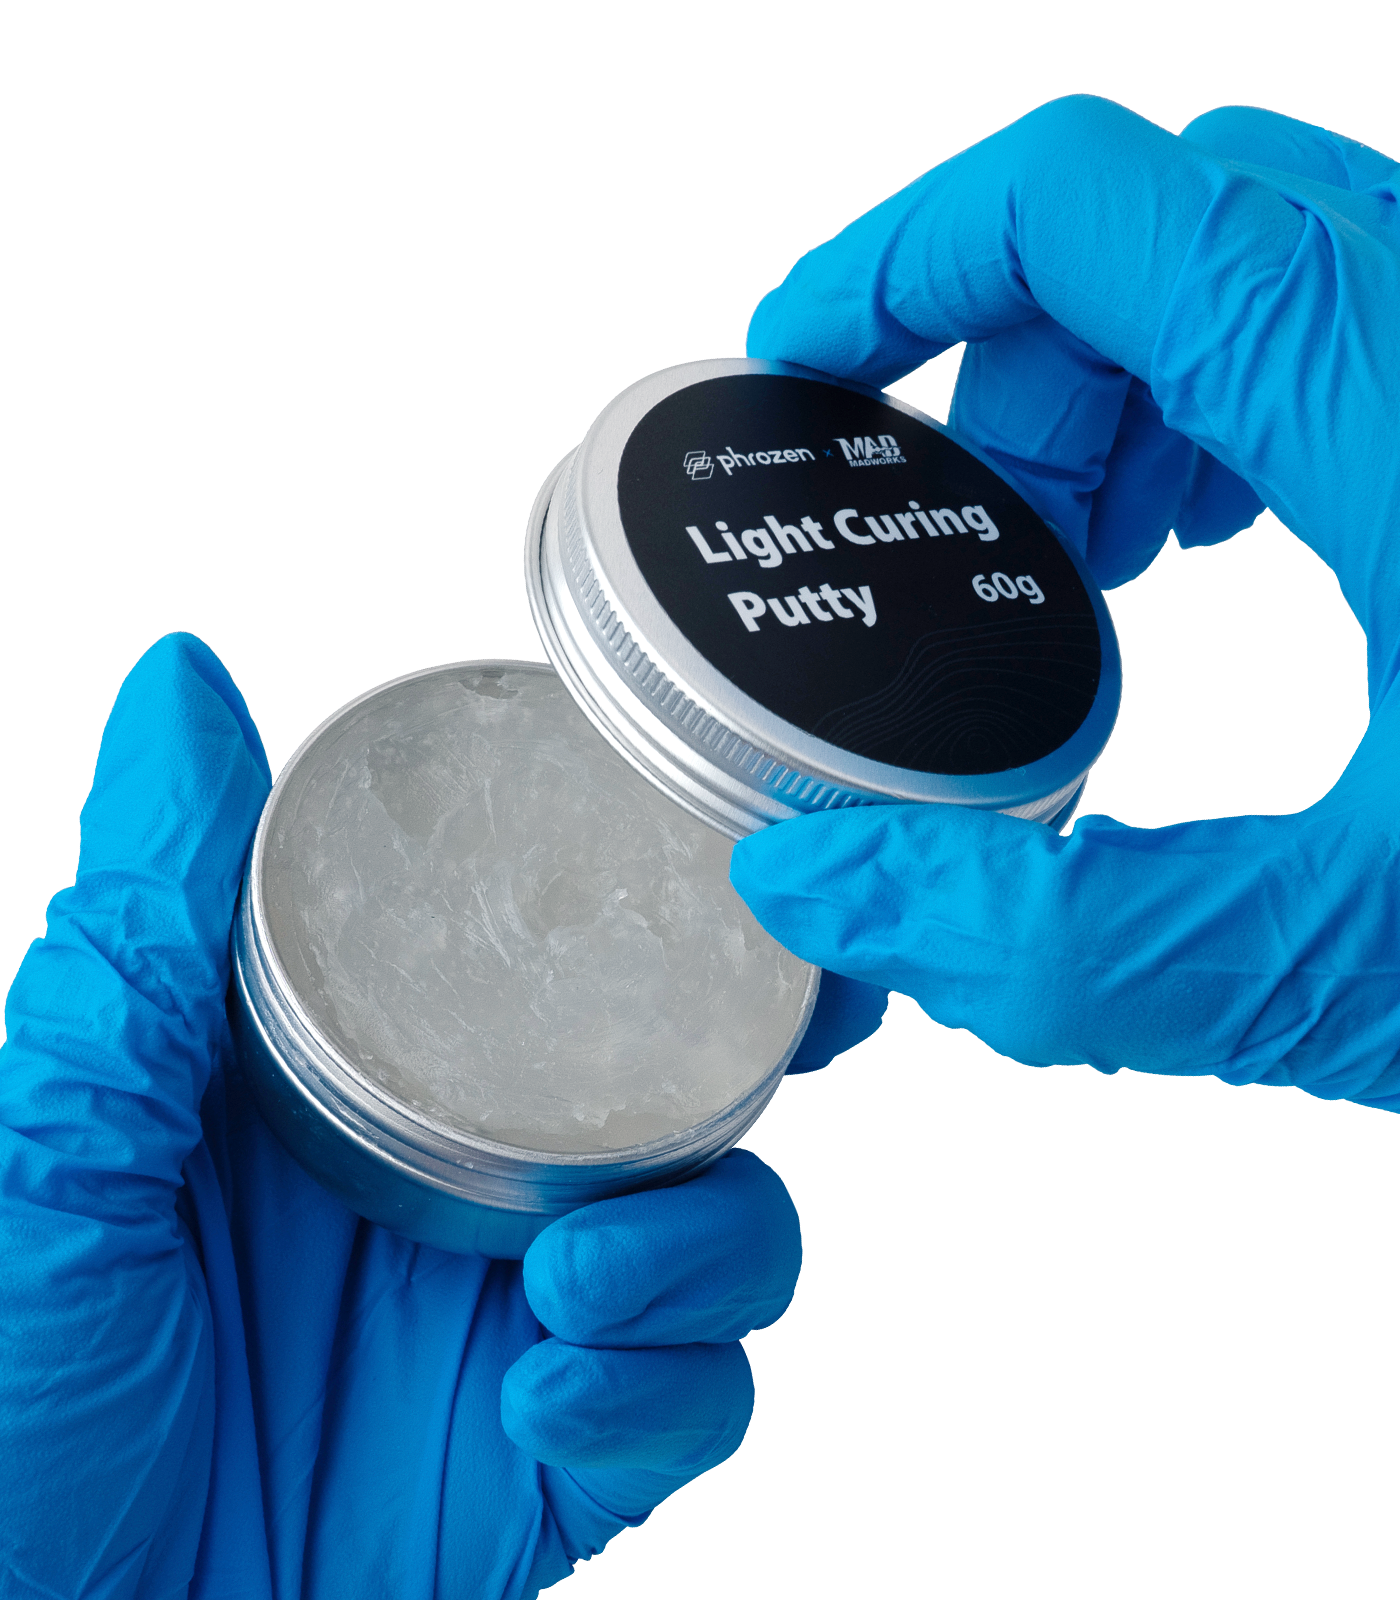 2 Pcs UV Resin Light -Salikoo Large UV Light for Resin Curing and